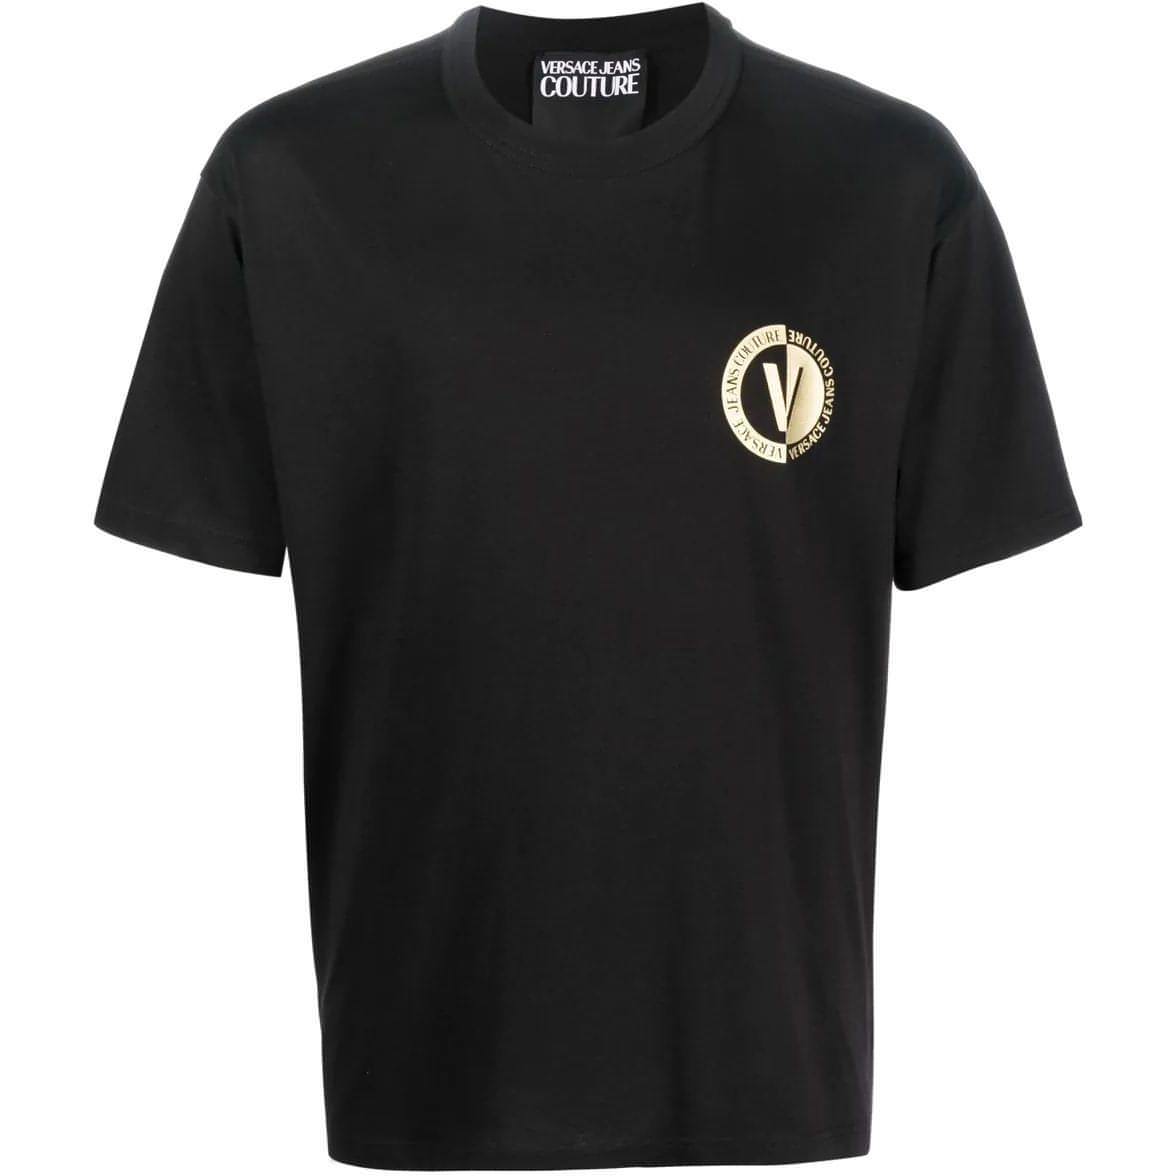 VERSACE JEANS COUTURE vyriški juodi marškinėliai New vemblem t-shirt